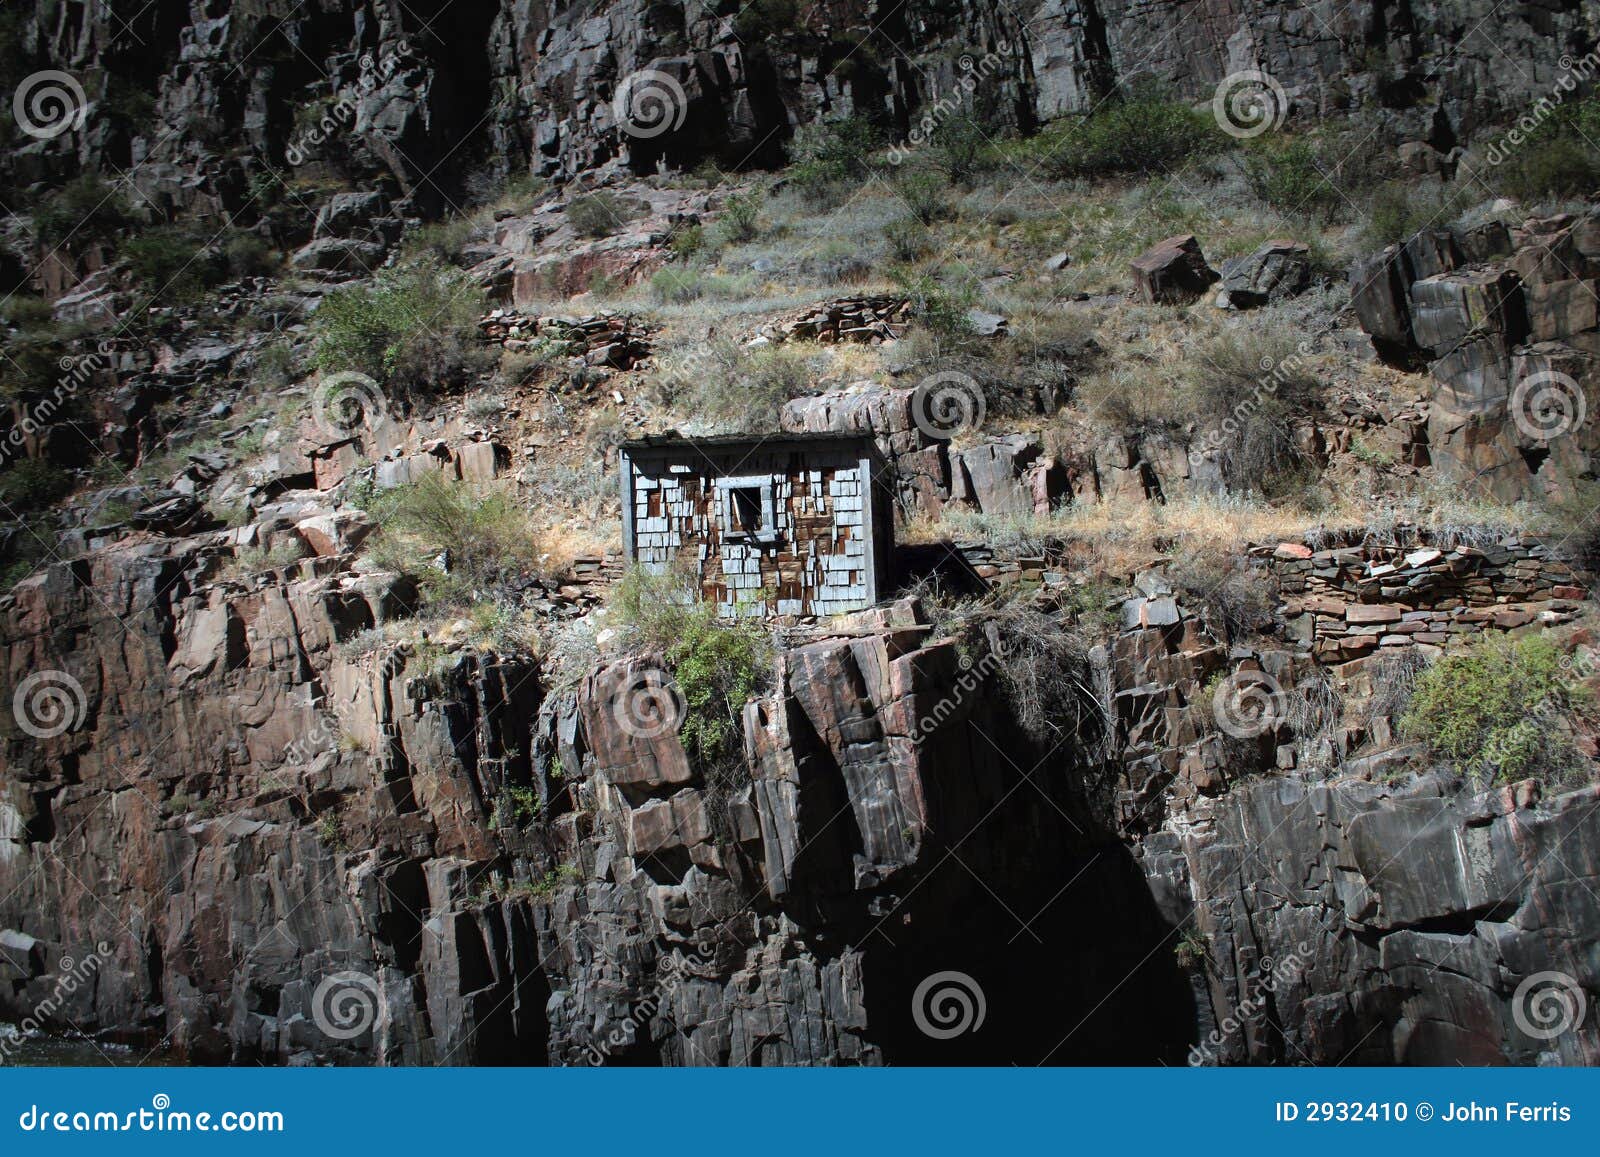 royal gorge shanty